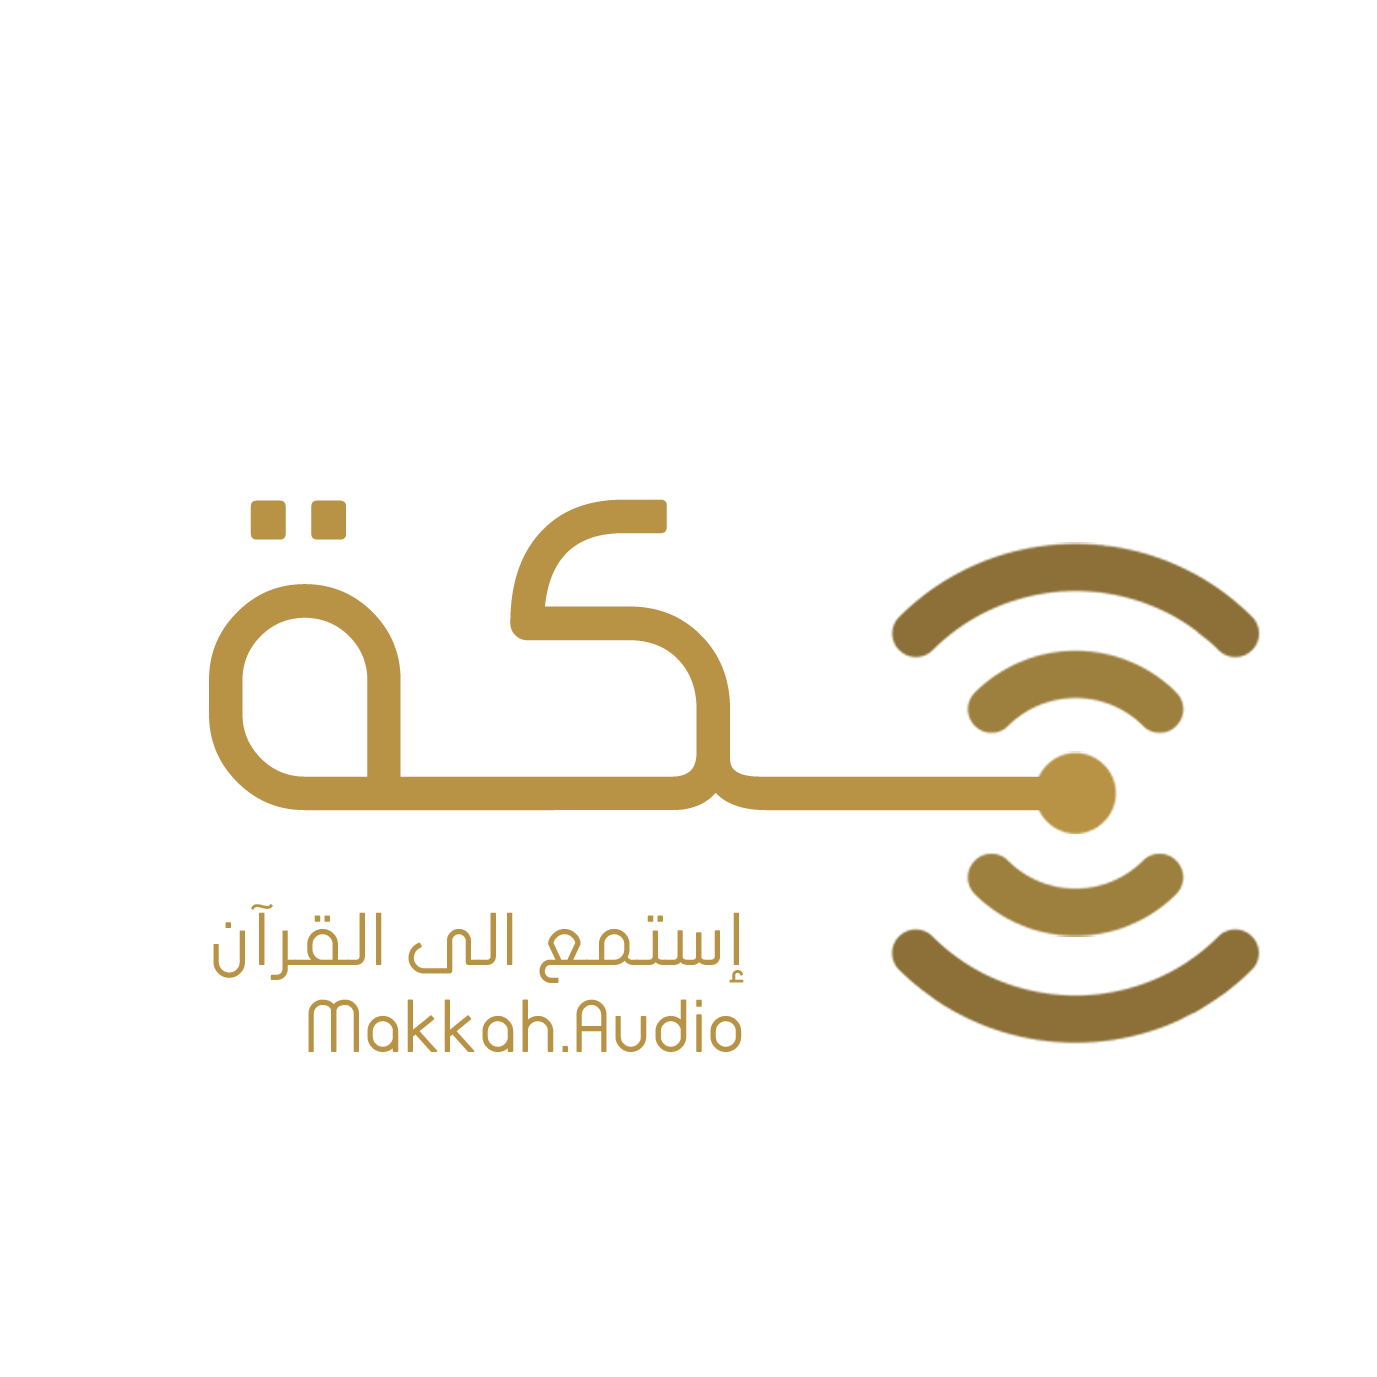 Makkah Audio